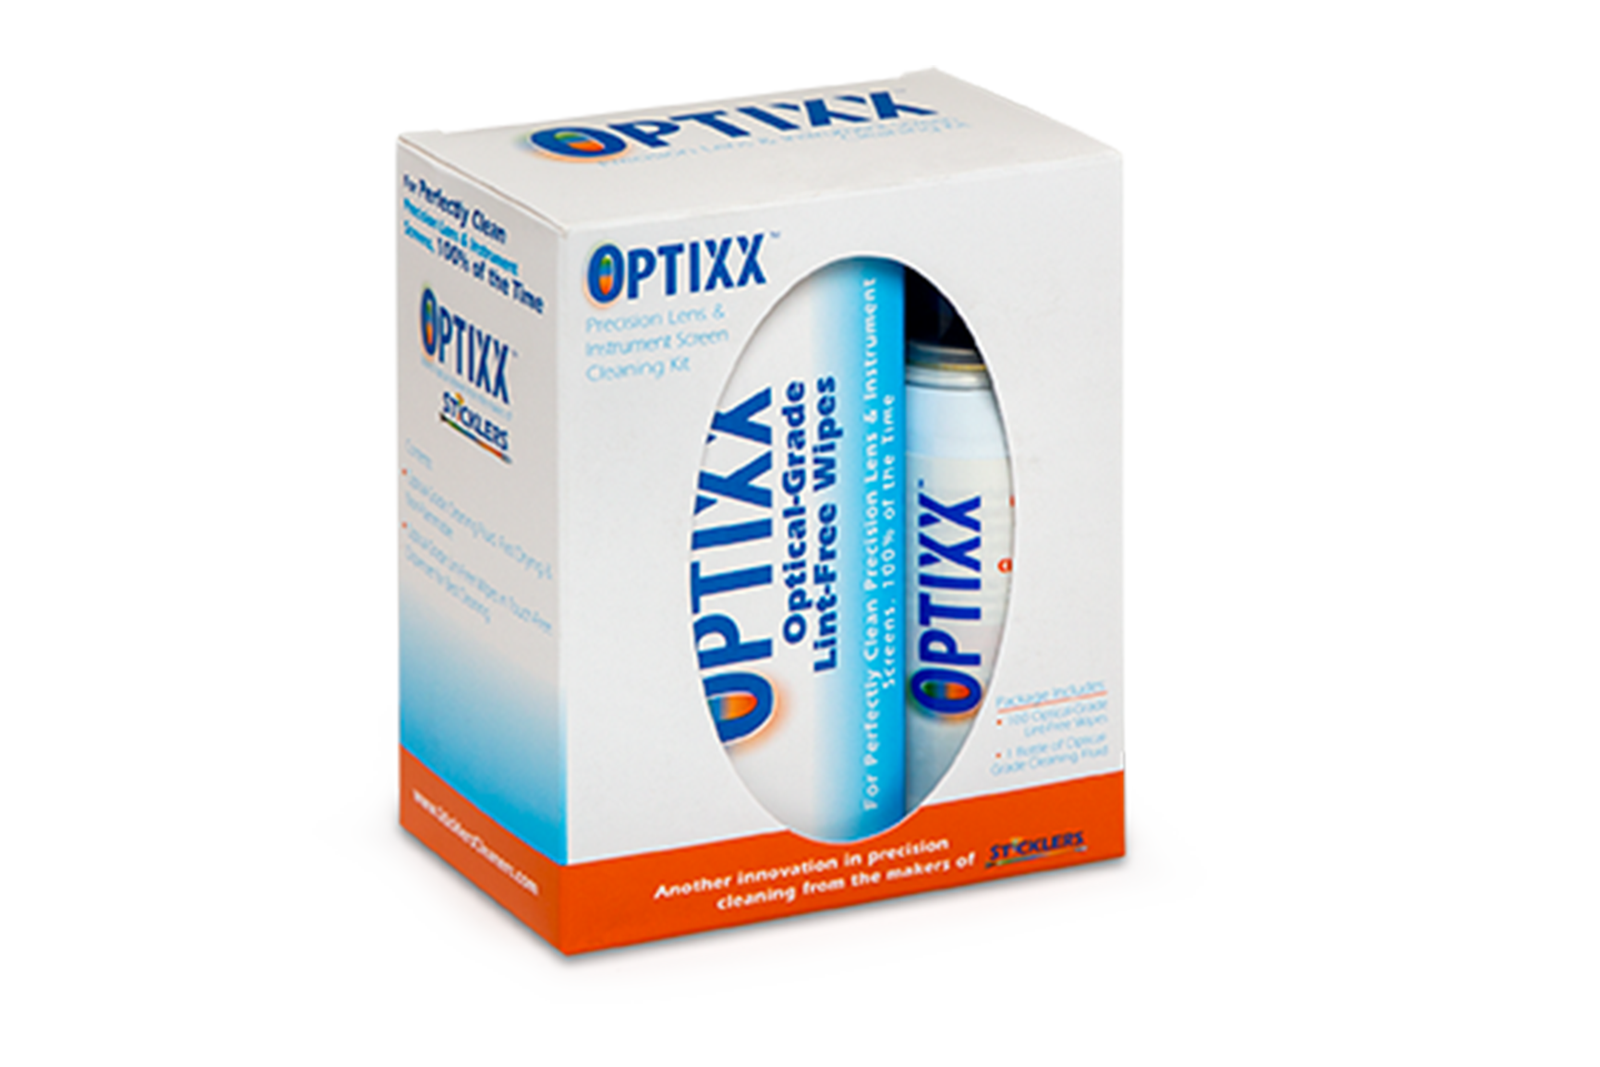 Optixx Lens Cleaner and Instrument Cleaner Kit sticklers MCC-OTXCK mcc-otx03m mcc-otxw